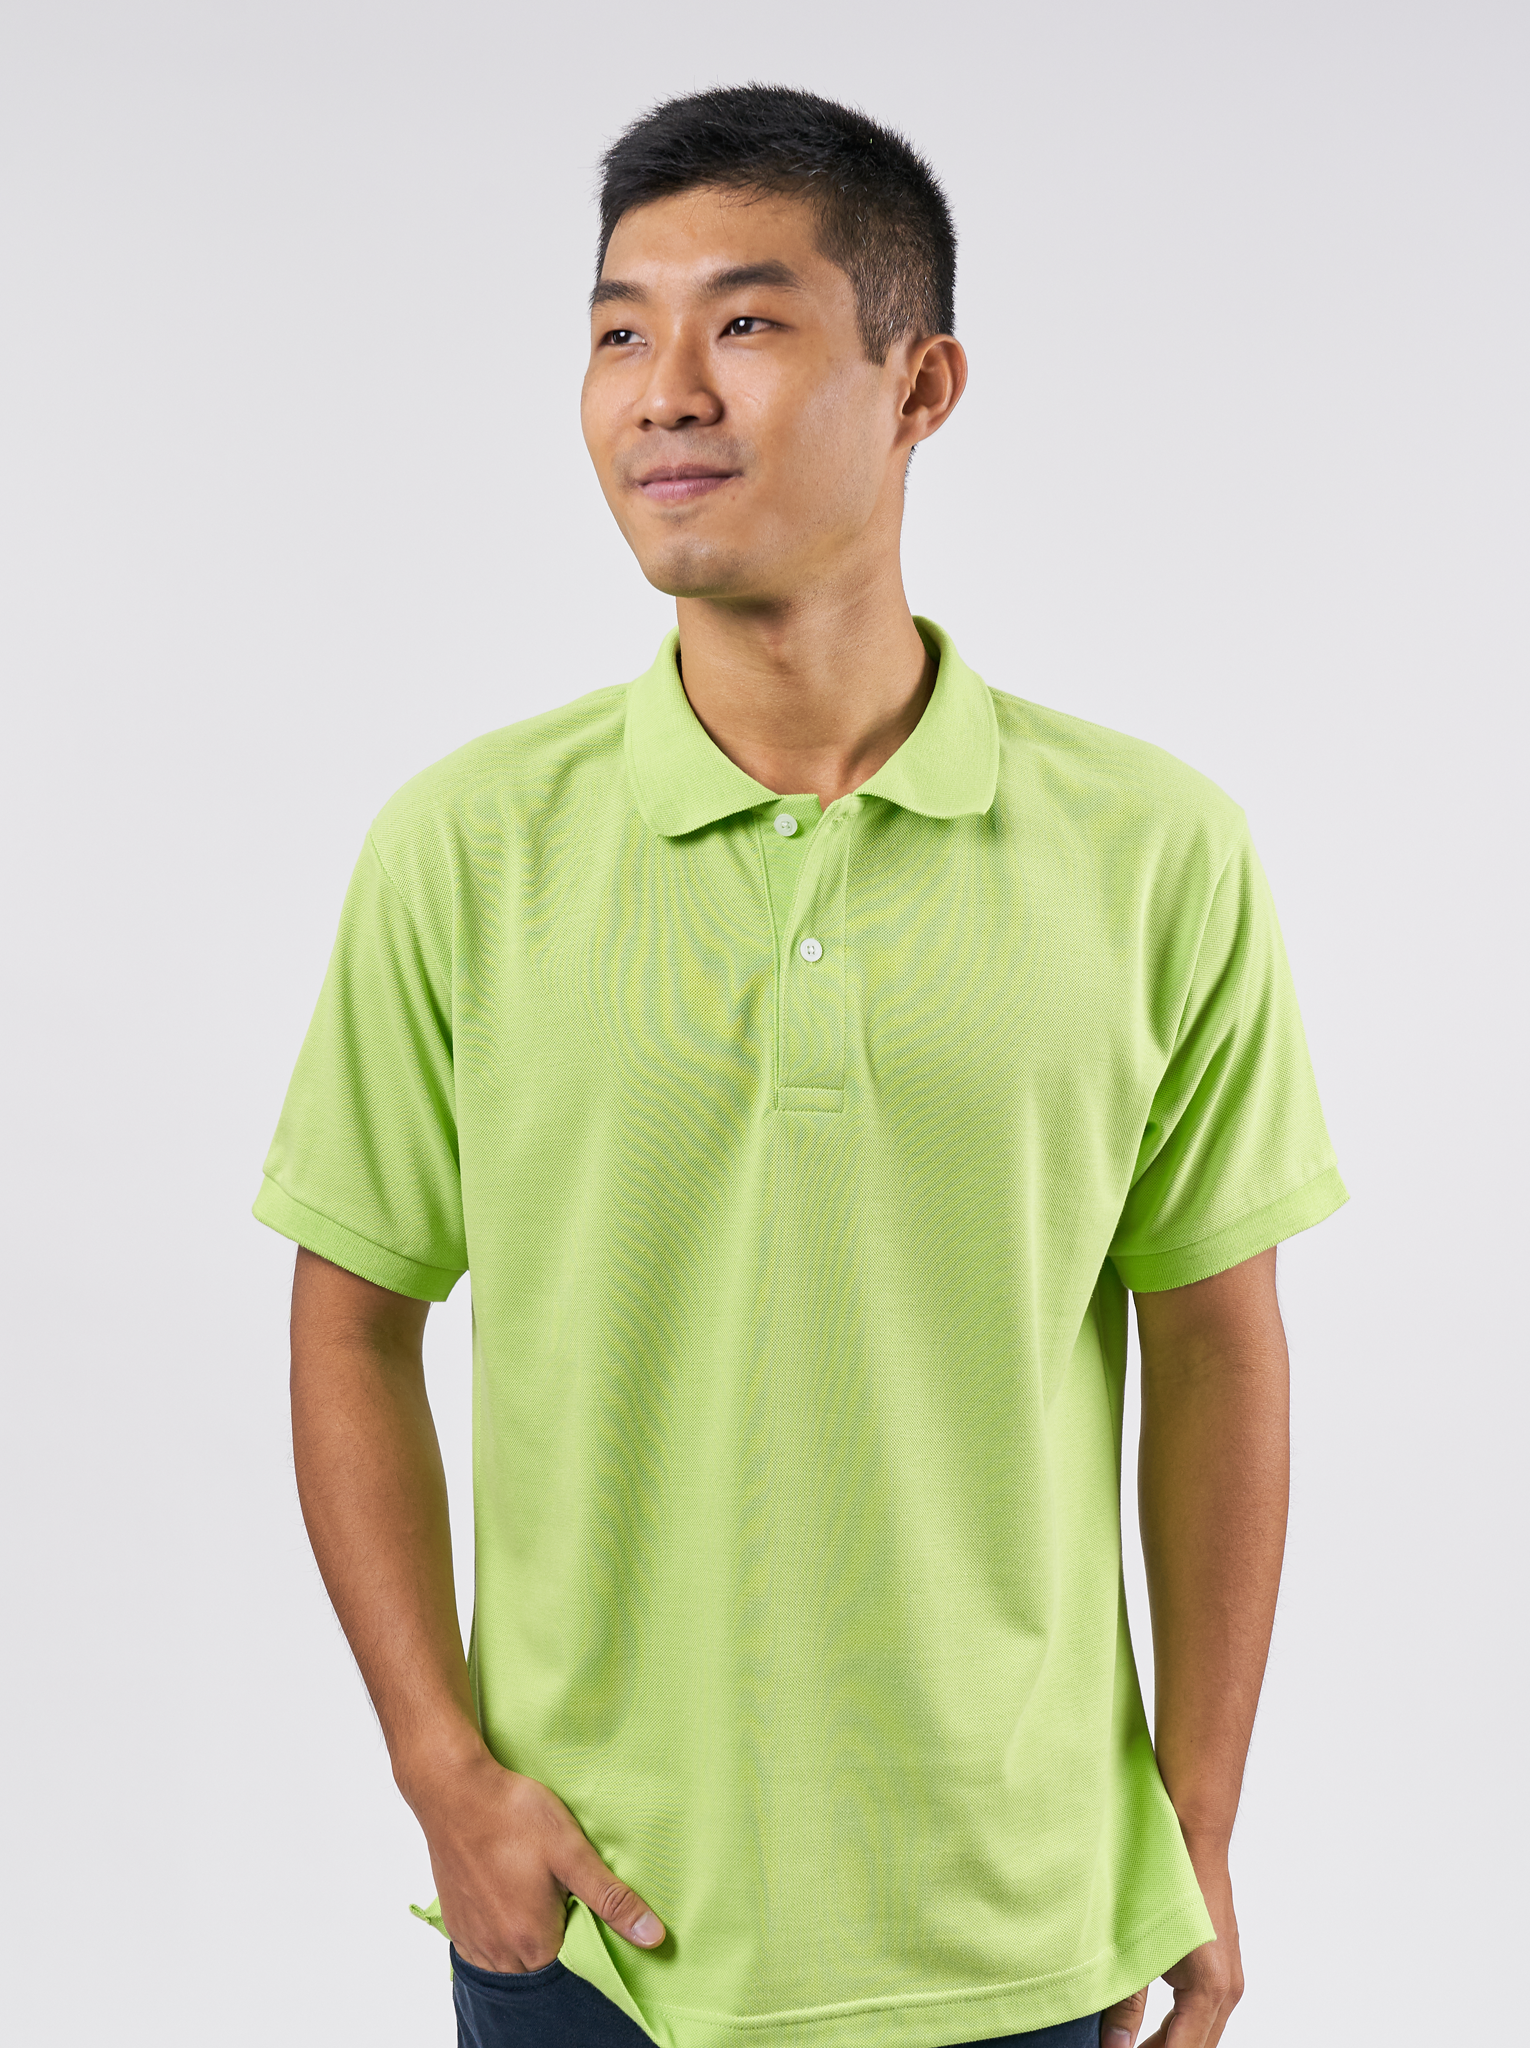 Polo Shirt เสื้อโปโล (Light Green, สีเขียวอ่อน)(Unisex)